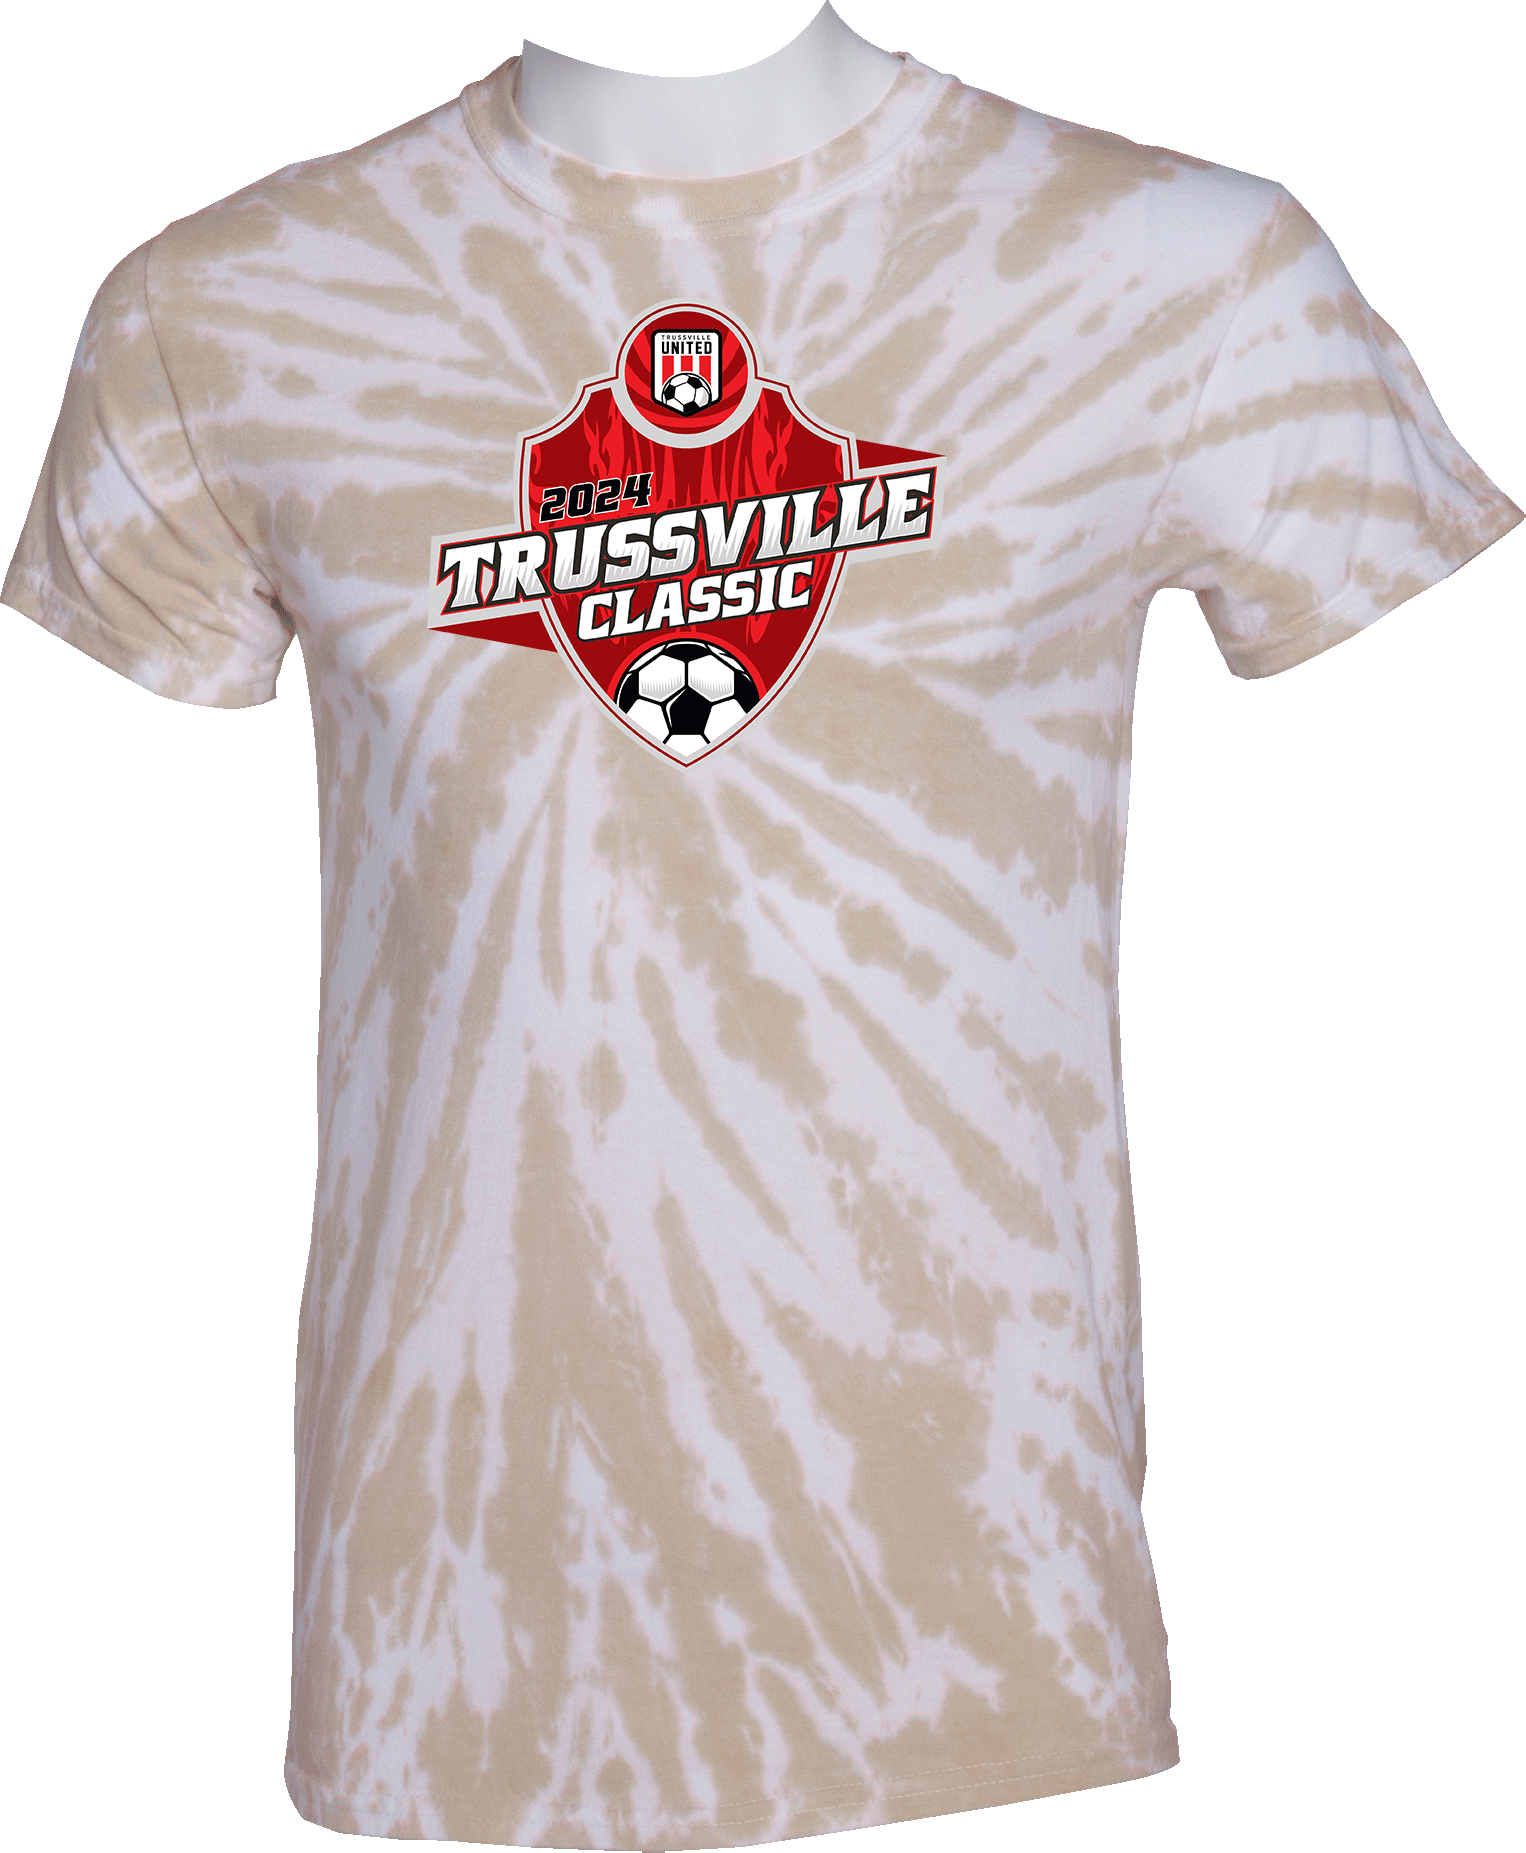 Tie-Dye Short Sleeves - 2024 Trussville Classic